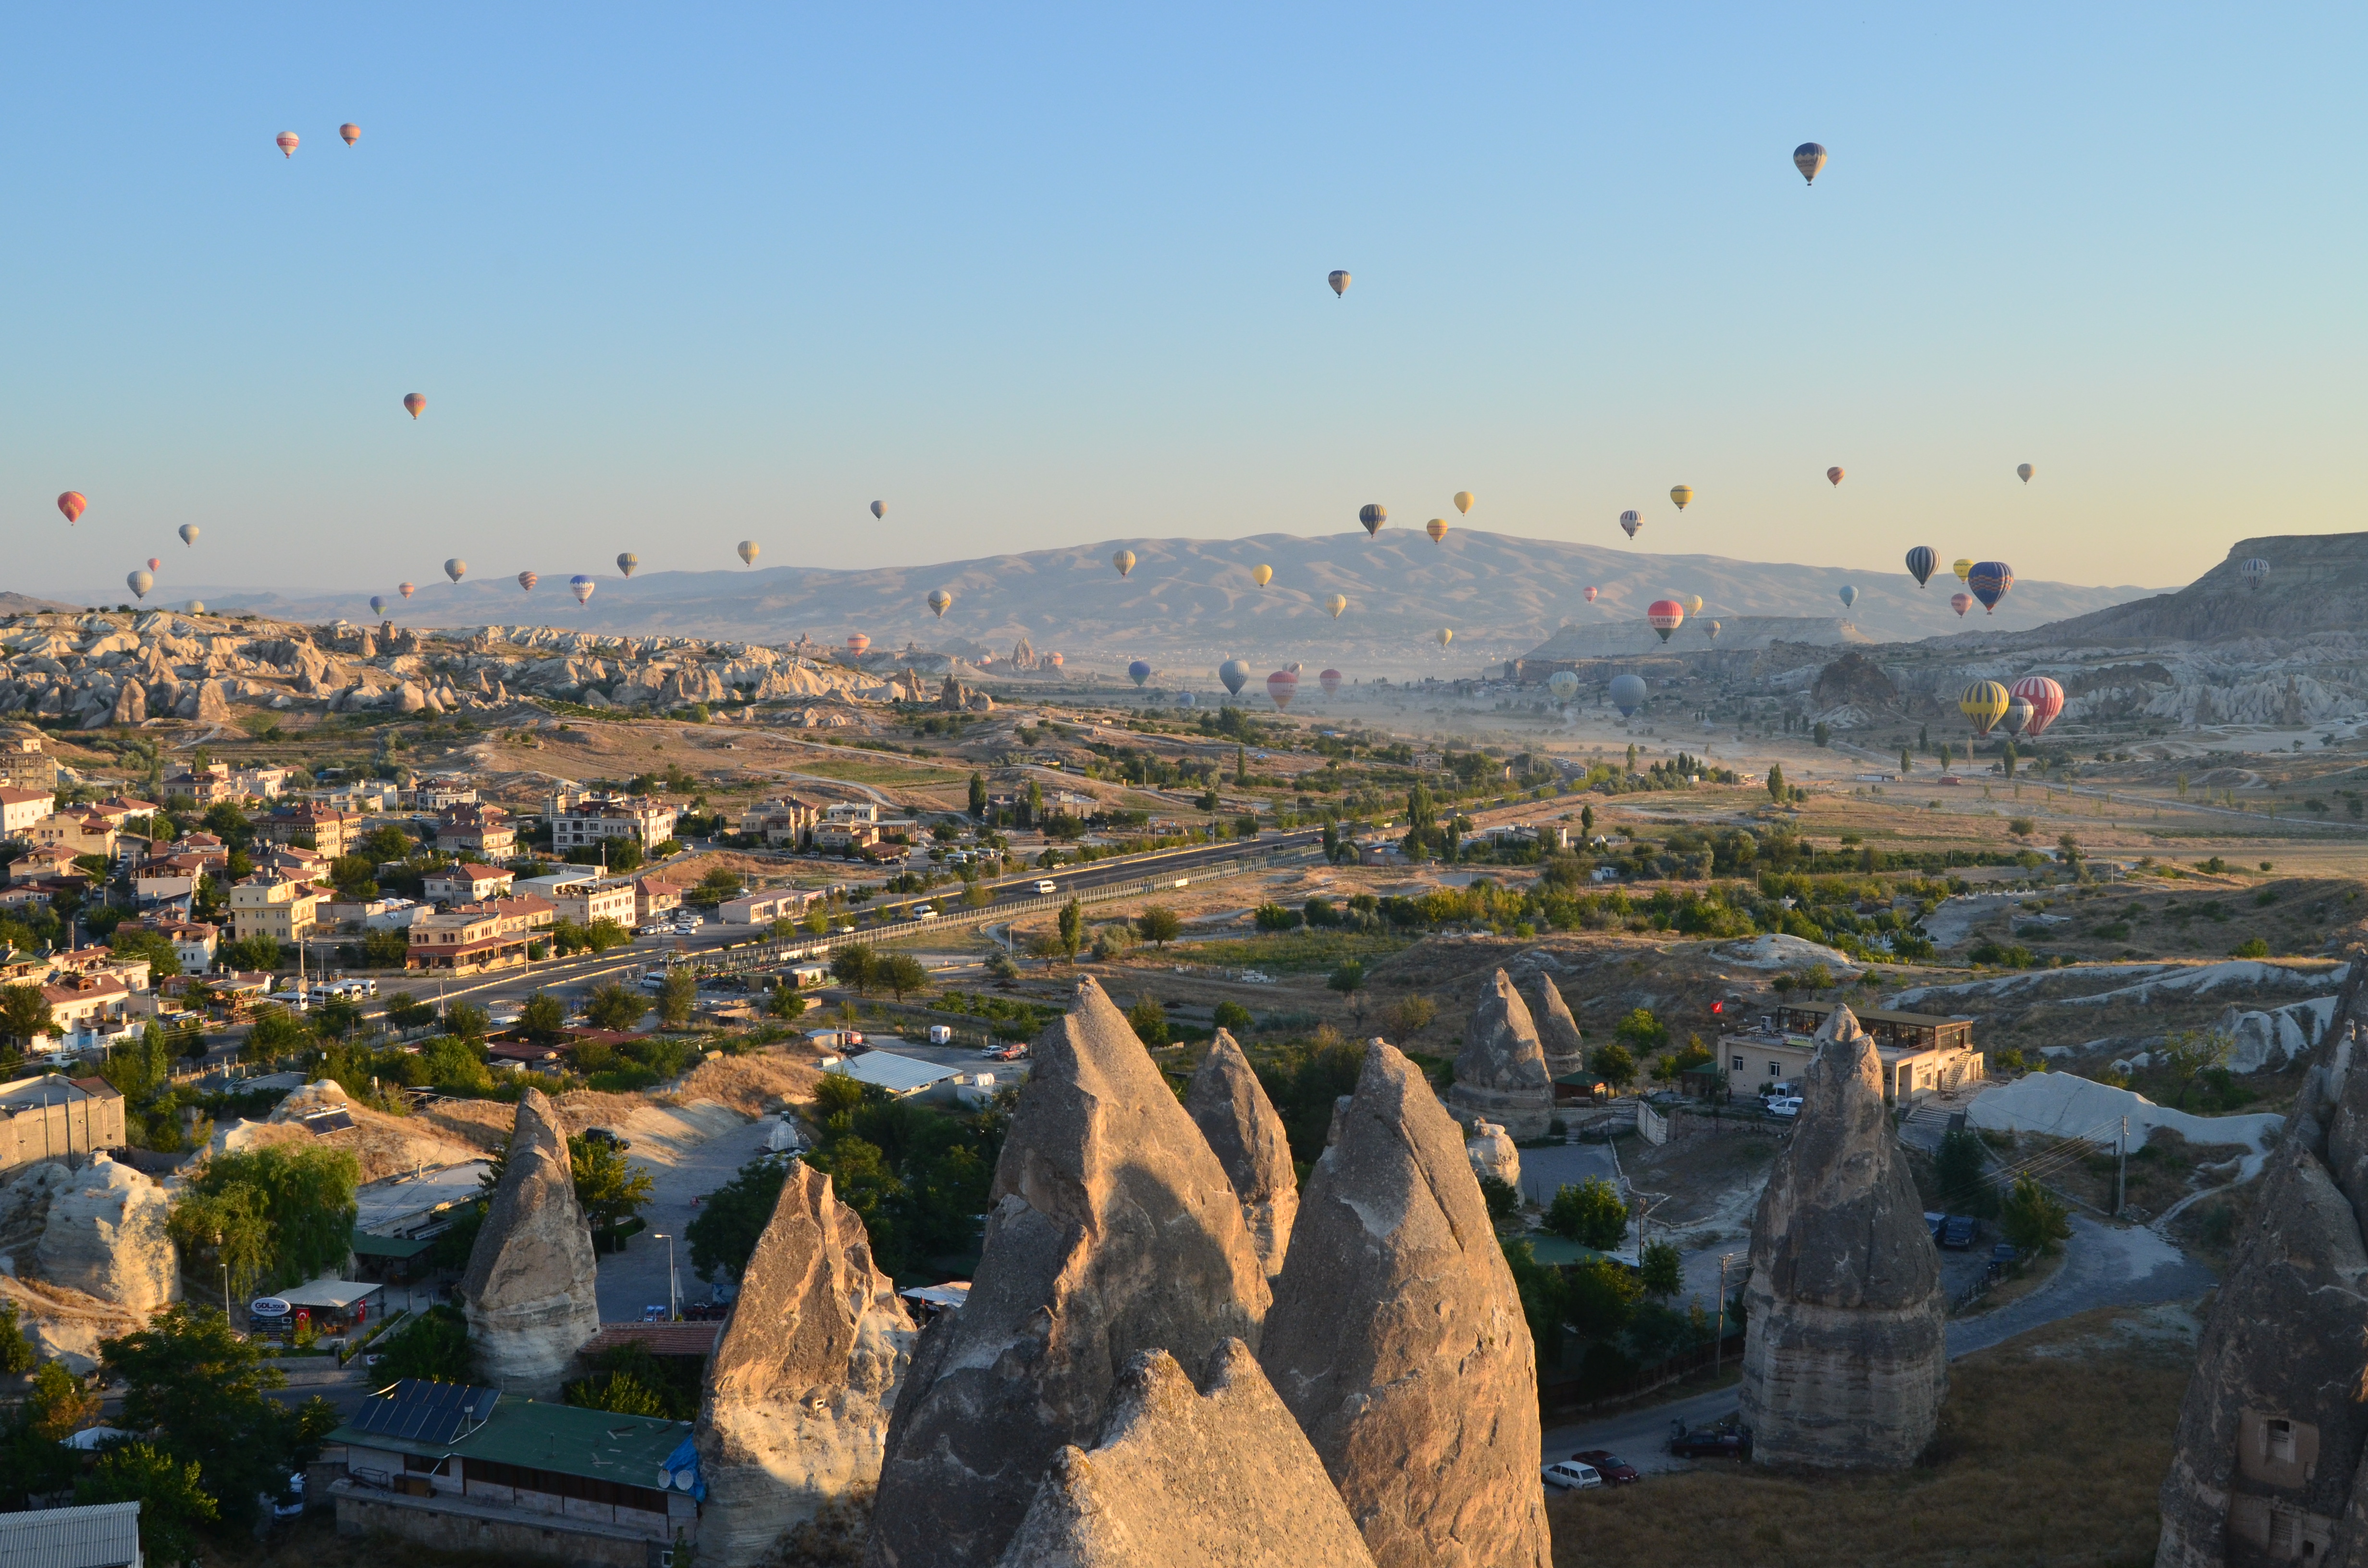 Göreme National Park and the Rock sites of Cappadocia